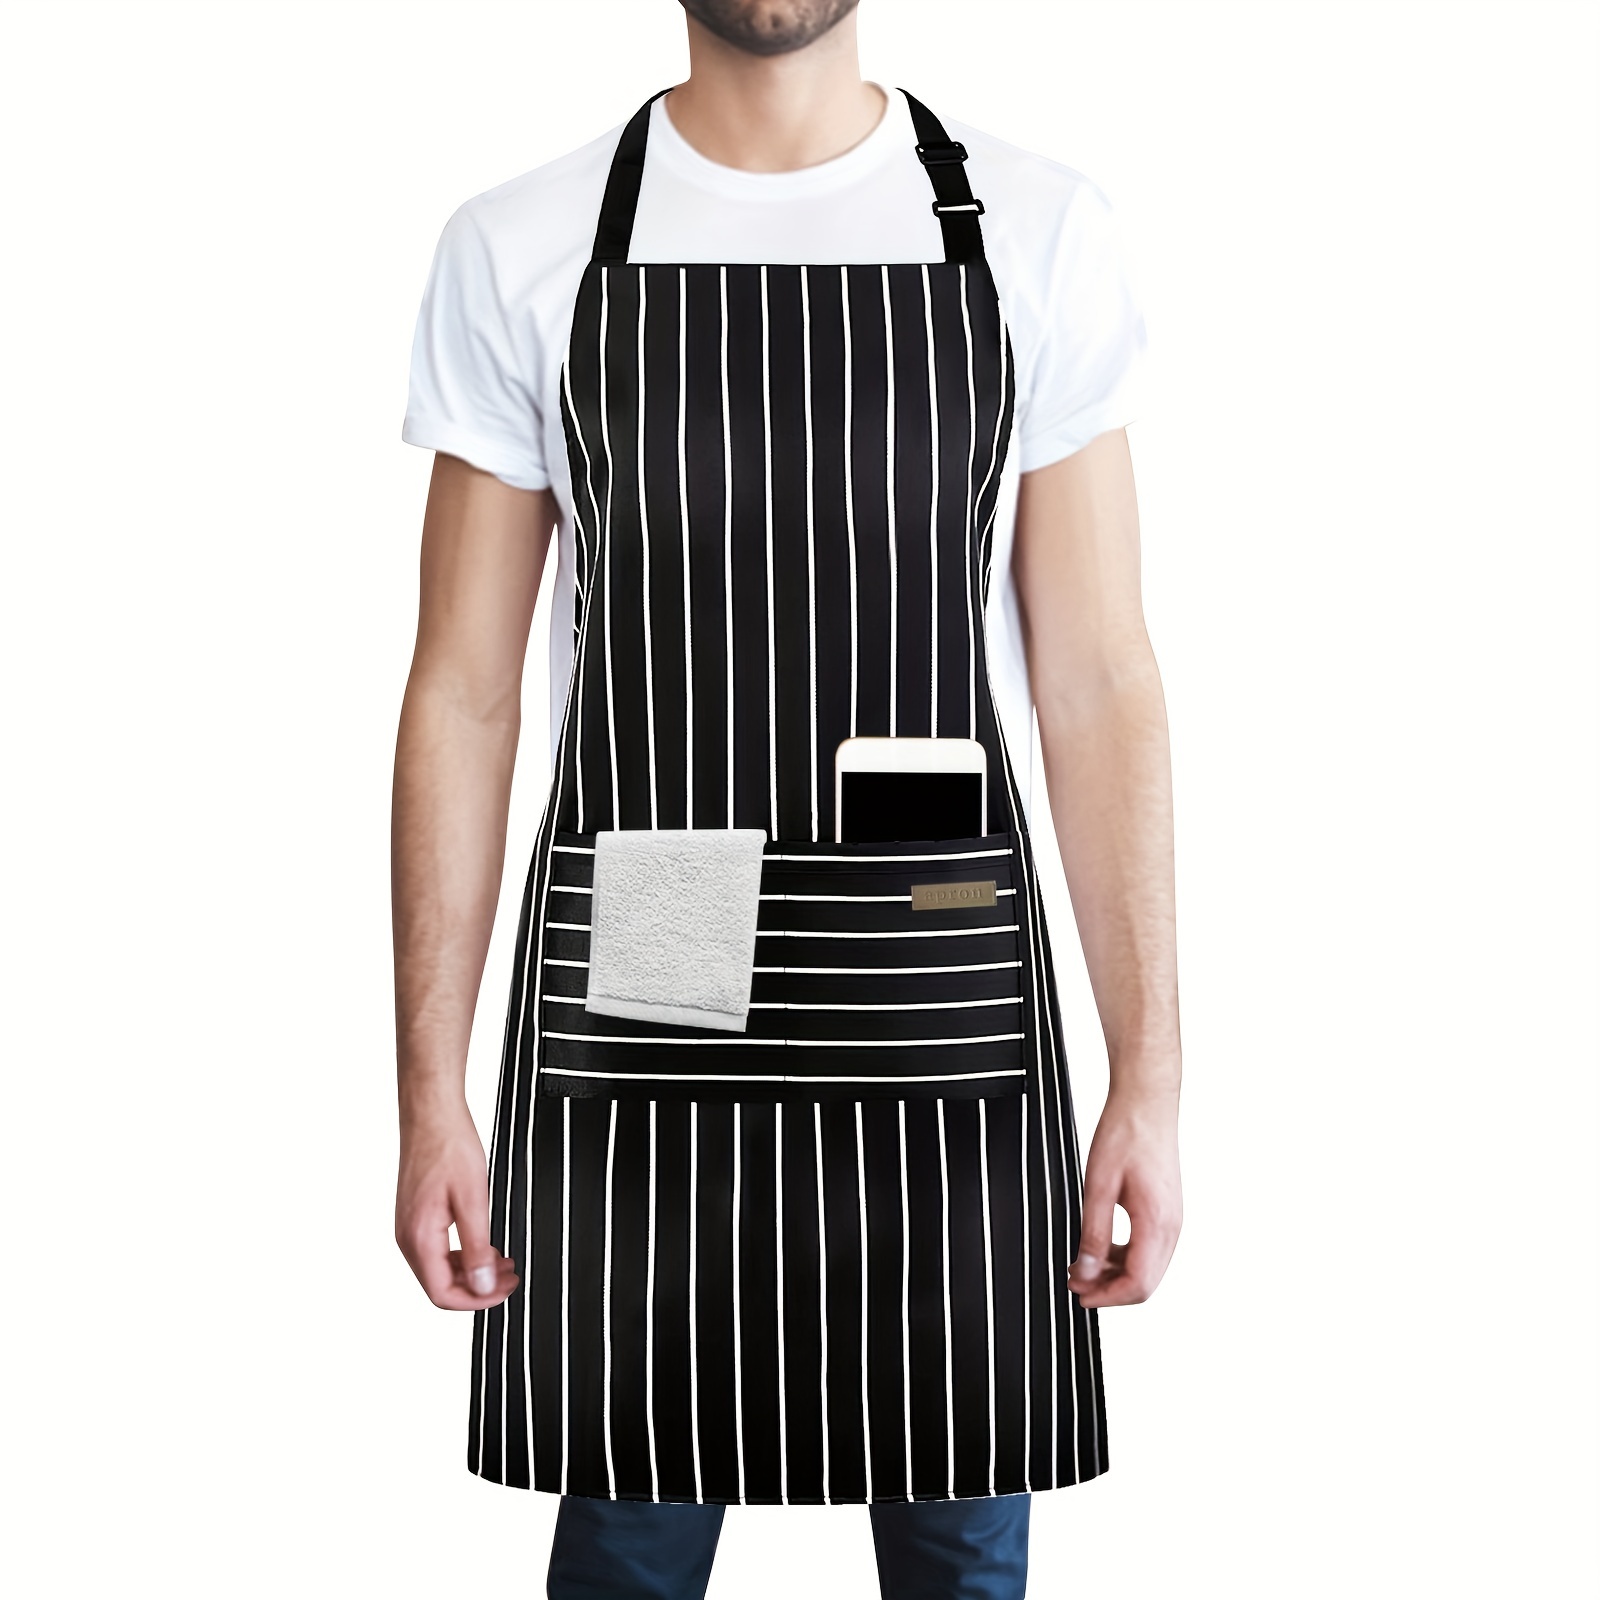 Delantal negro personalizado de Chef con un bolsillo